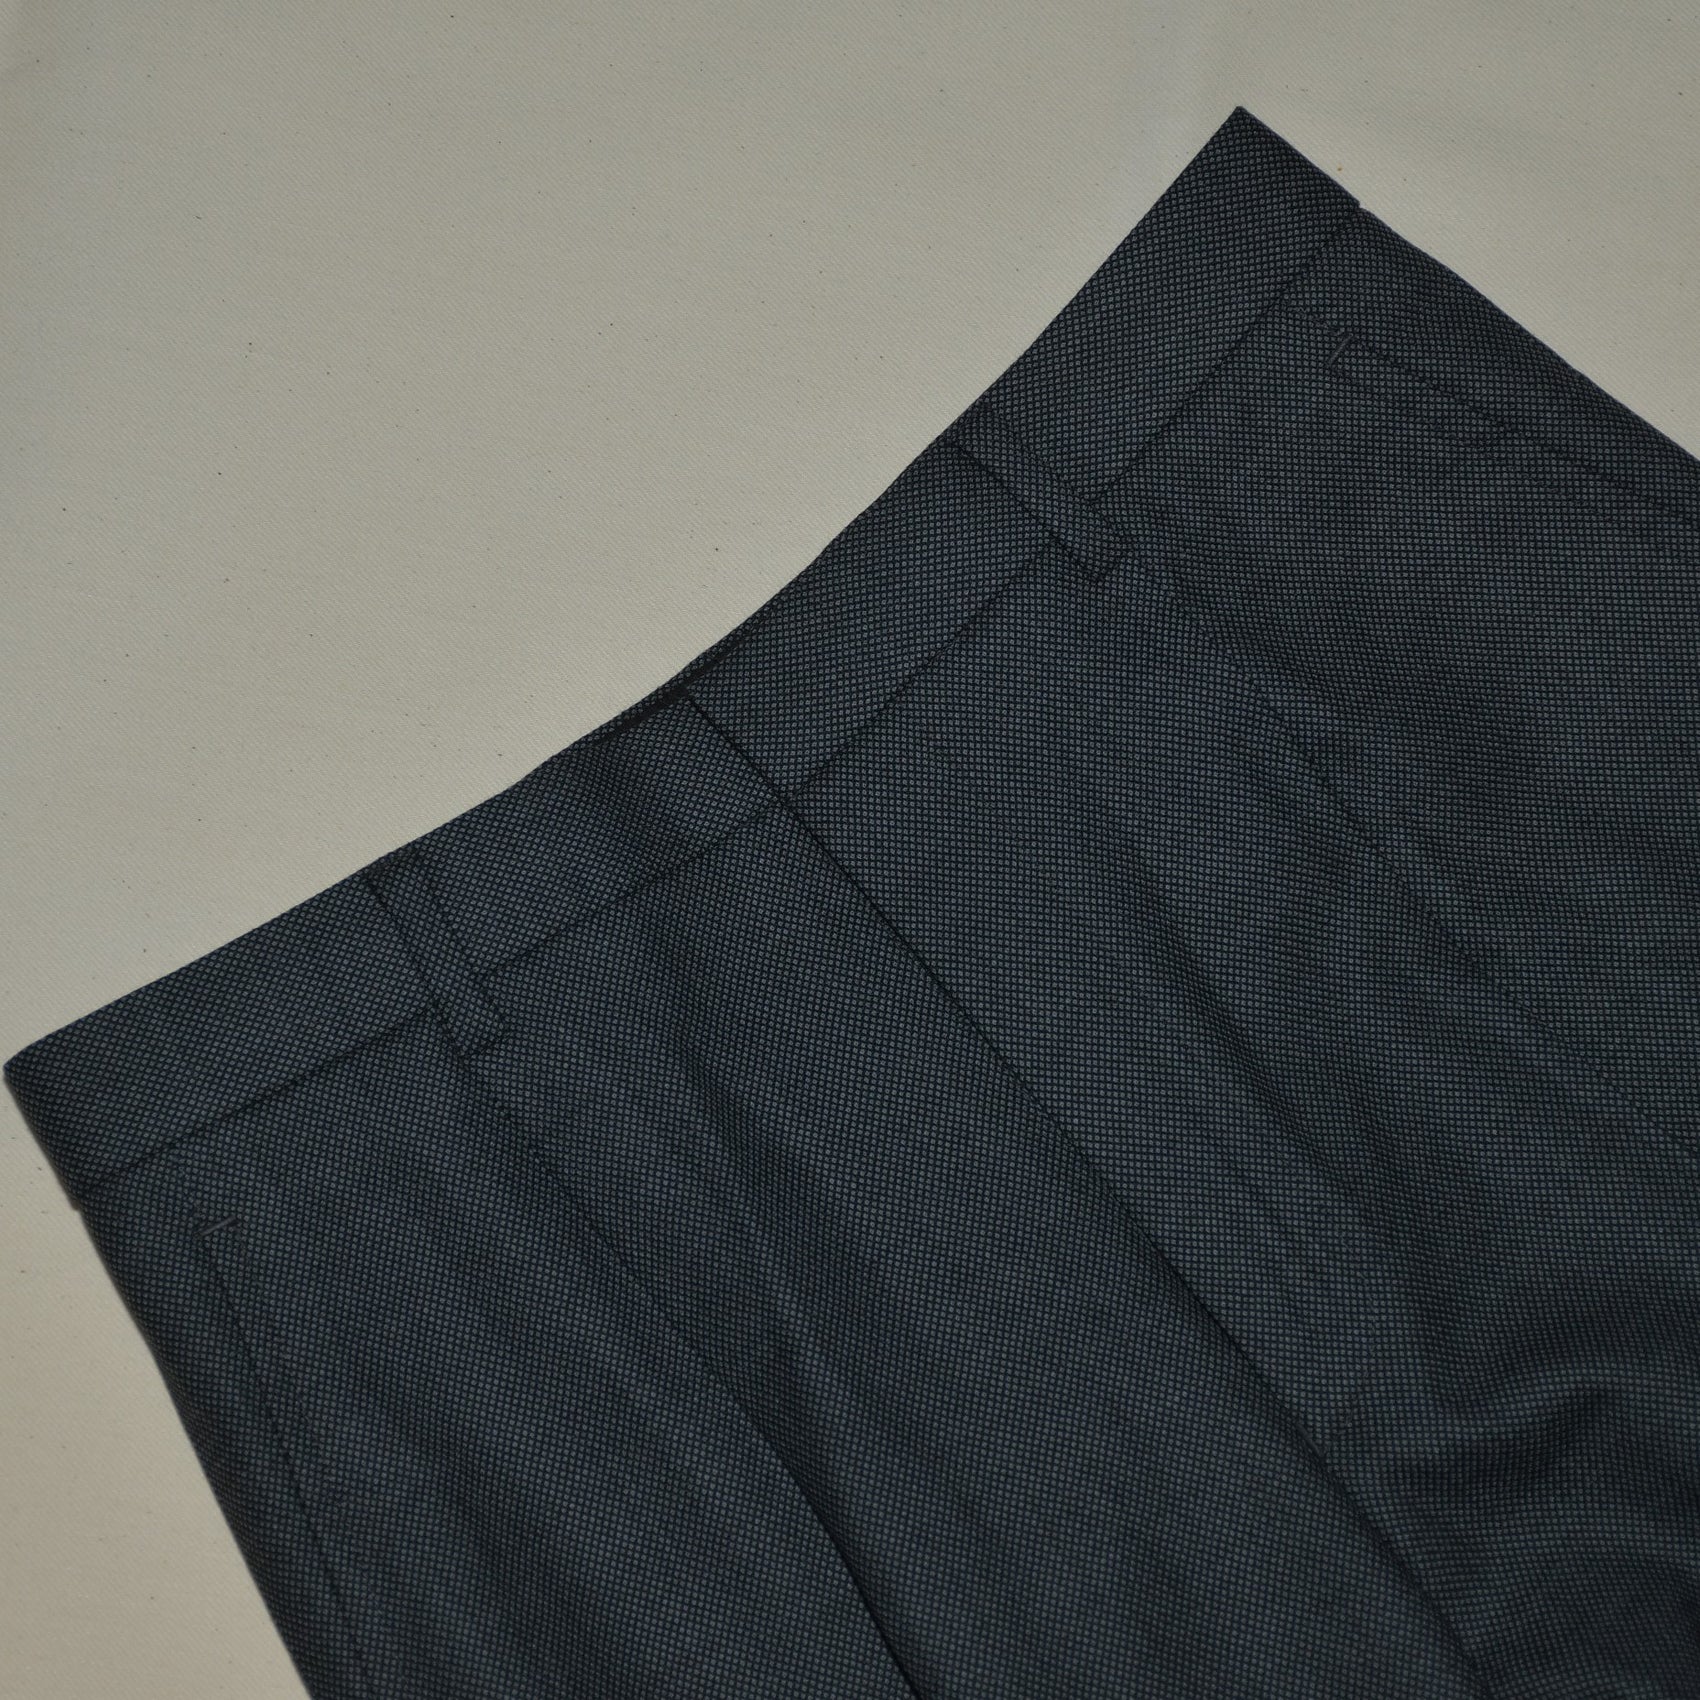 [Sample] Lanitex Birdseye Wool Trousers  - ST062